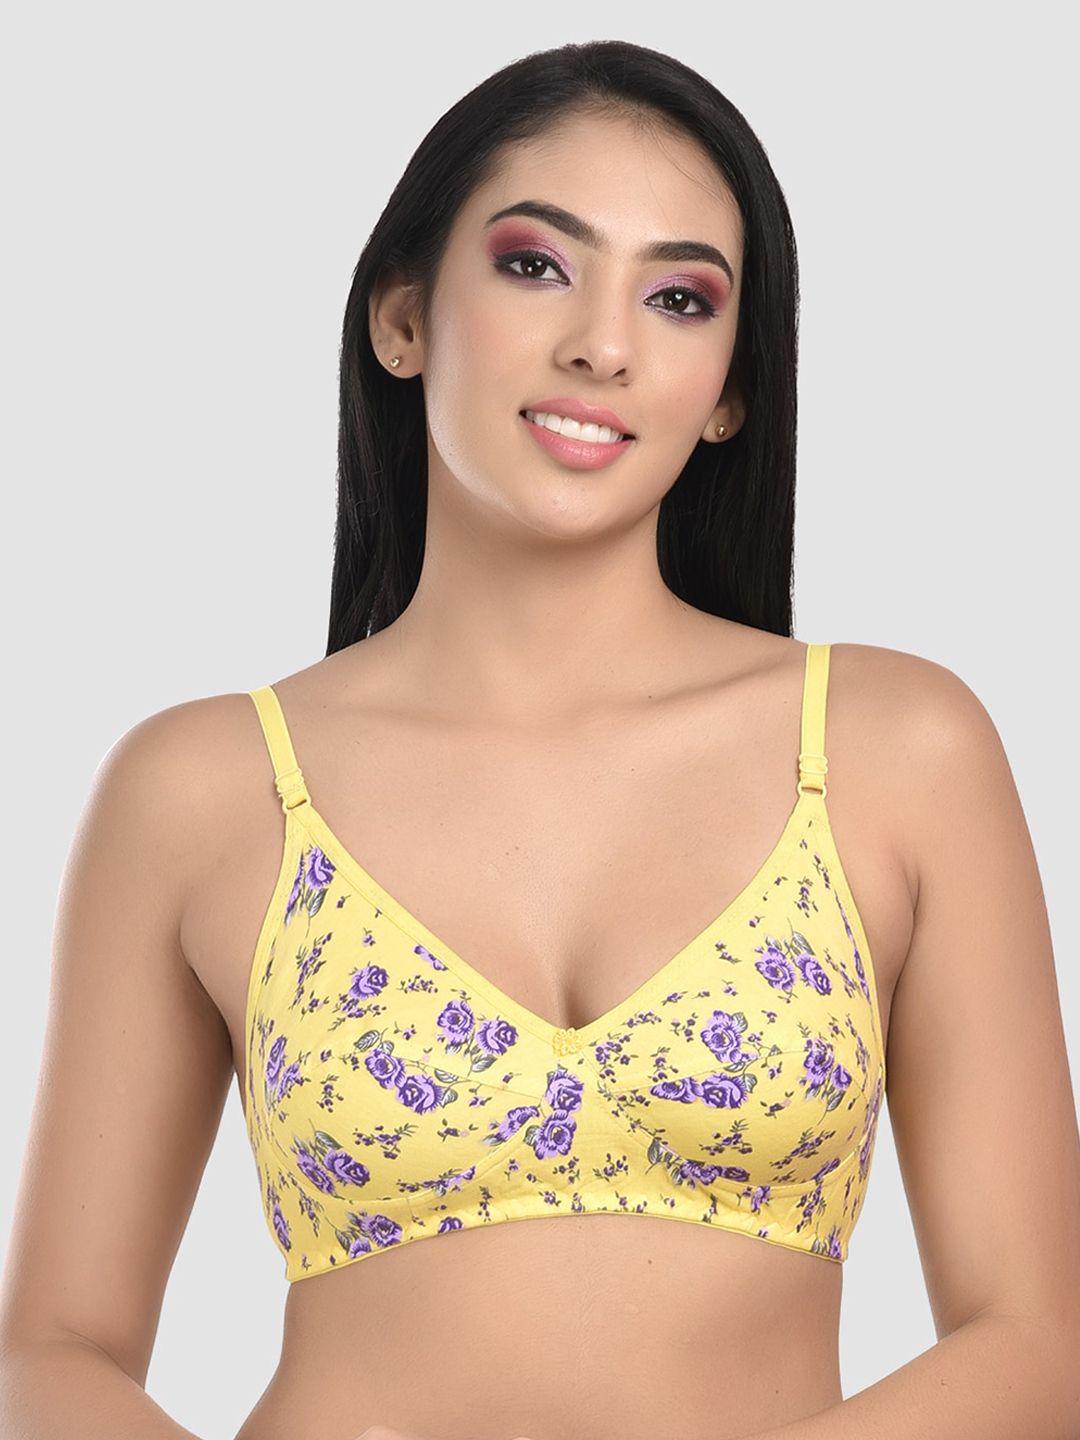 styfun women yellow bra